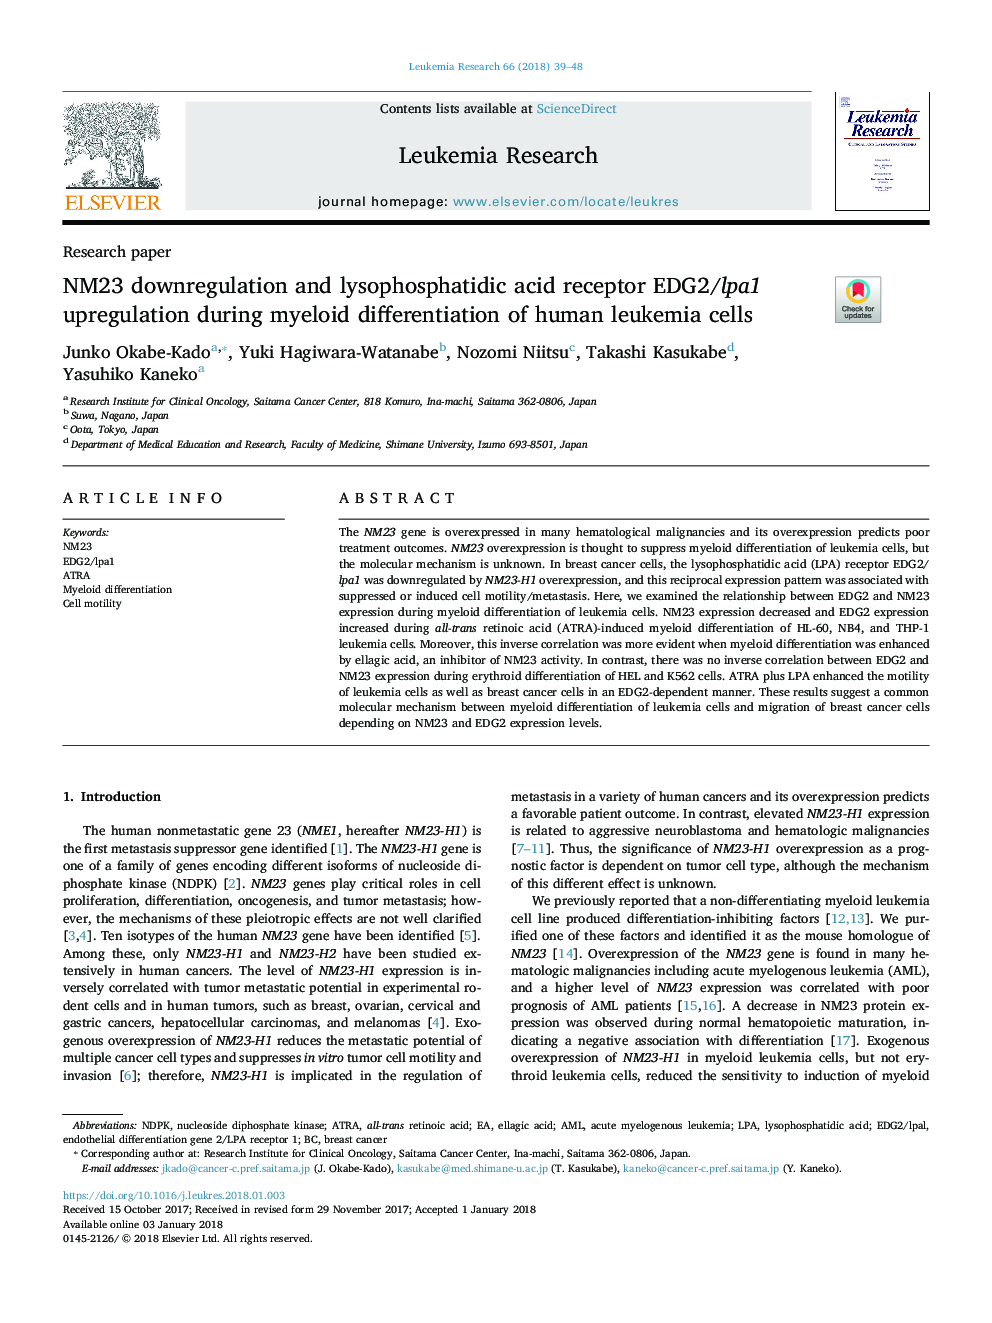 NM23 downregulation and lysophosphatidic acid receptor EDG2/lpa1 upregulation during myeloid differentiation of human leukemia cells